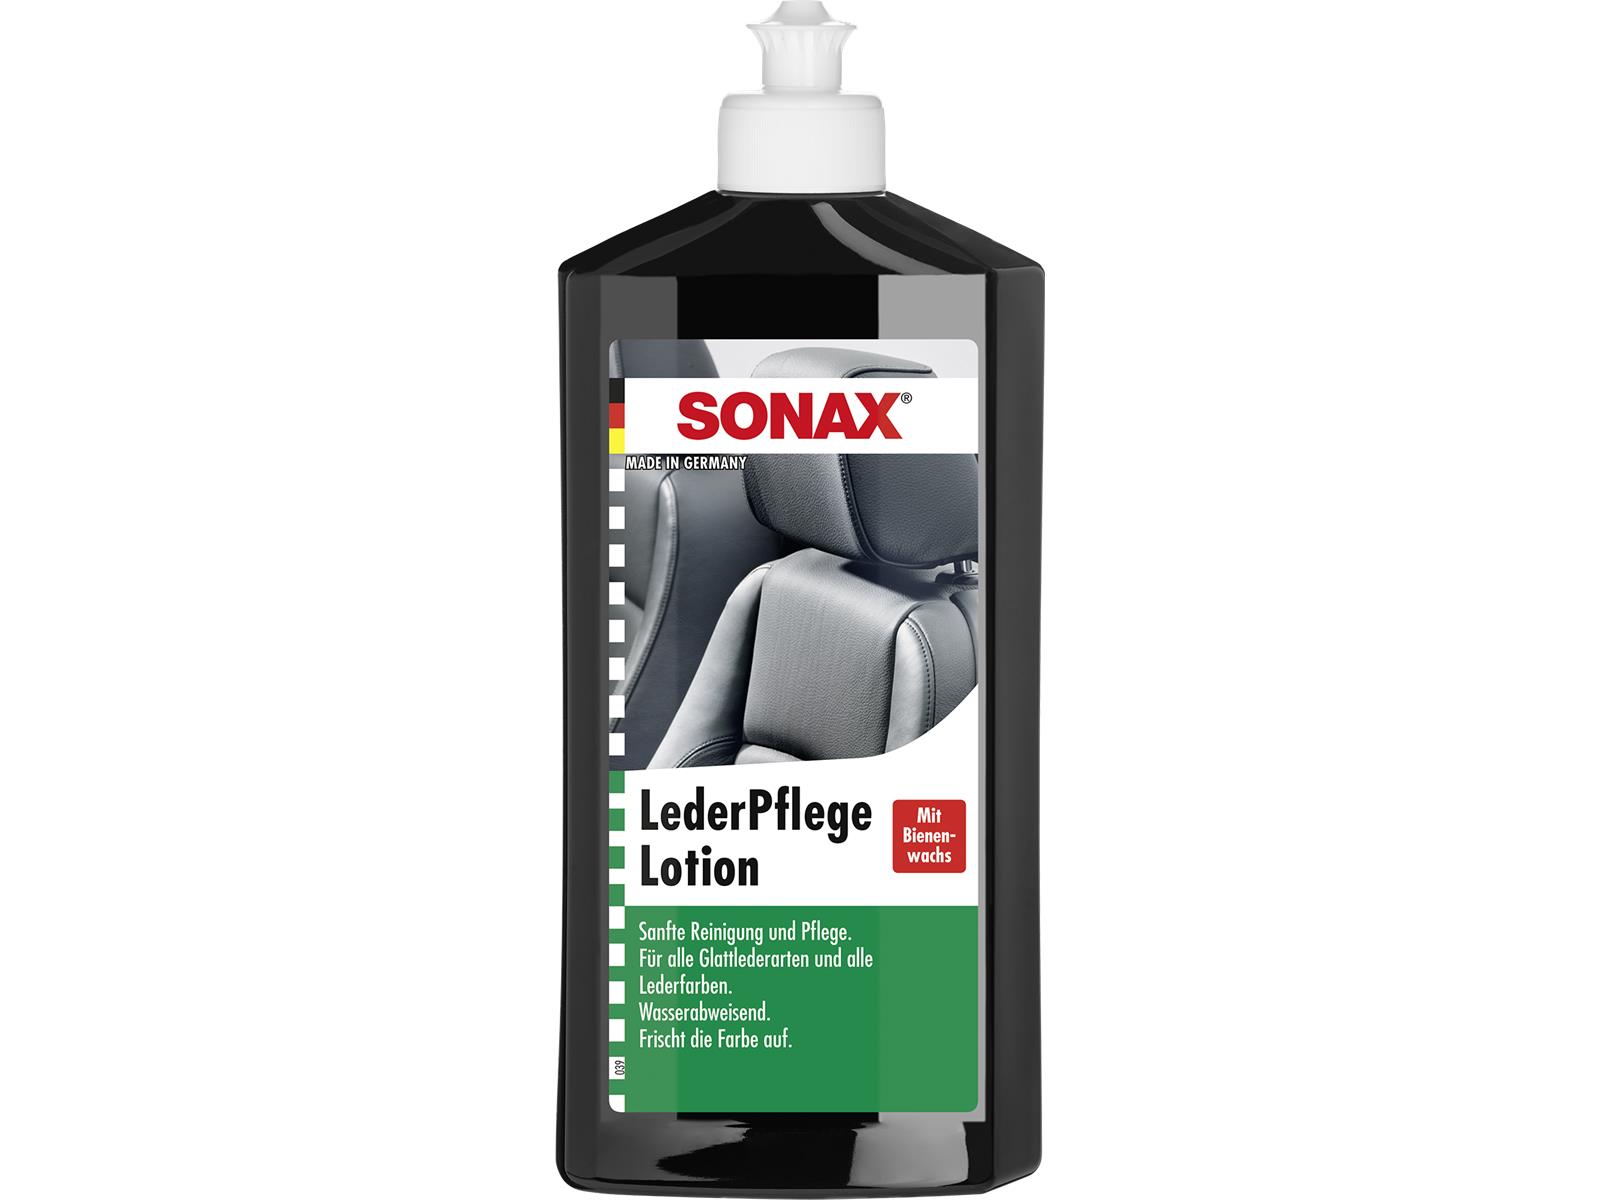 SONAX 02912000 LederPflegeLotion 500 ml